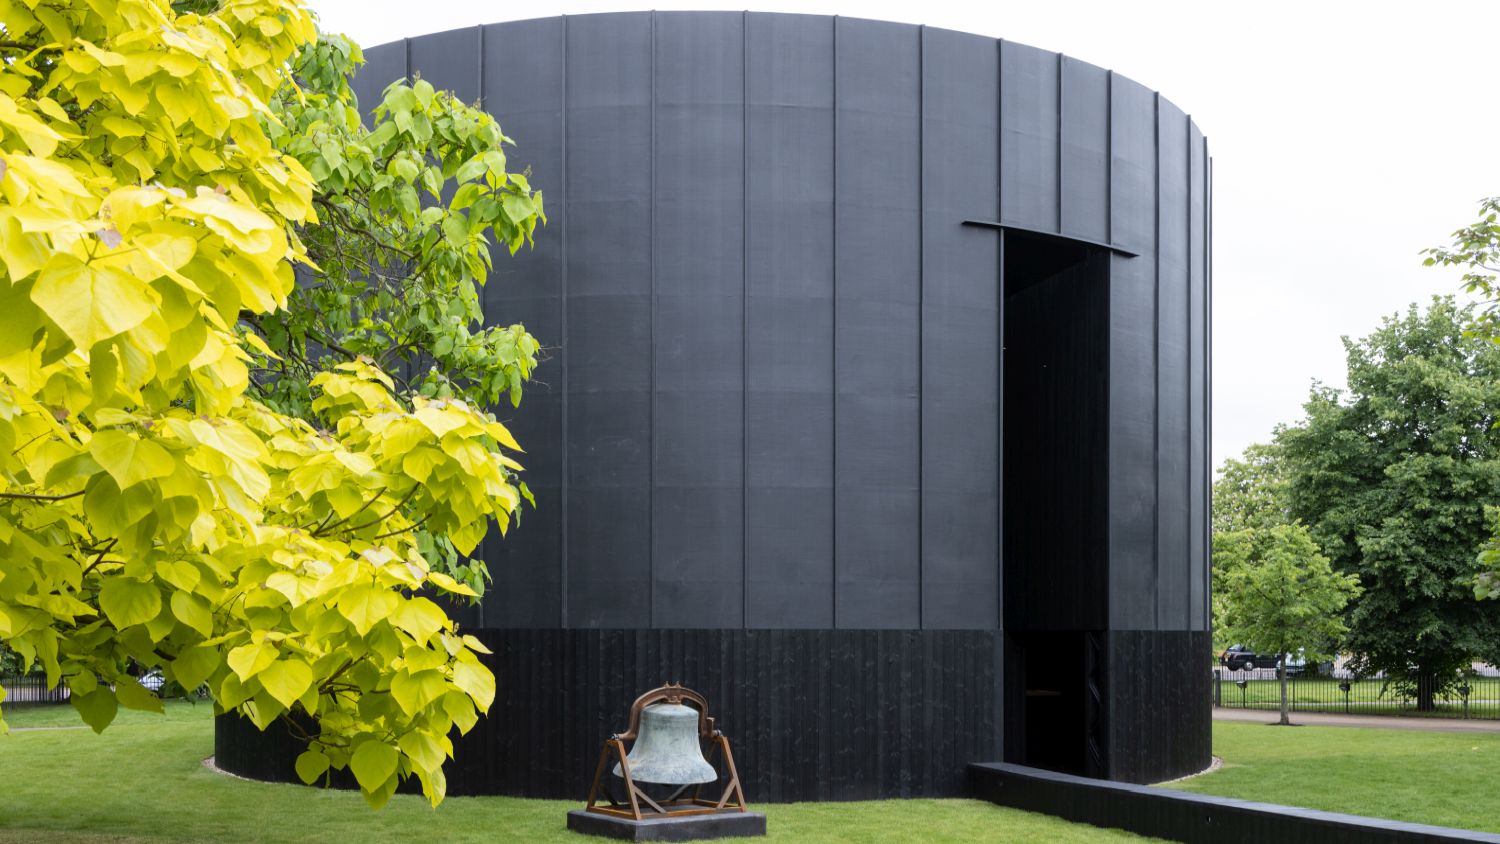 Aecom engineered the Serpentine Pavilion, designed by artist Theaster Gates